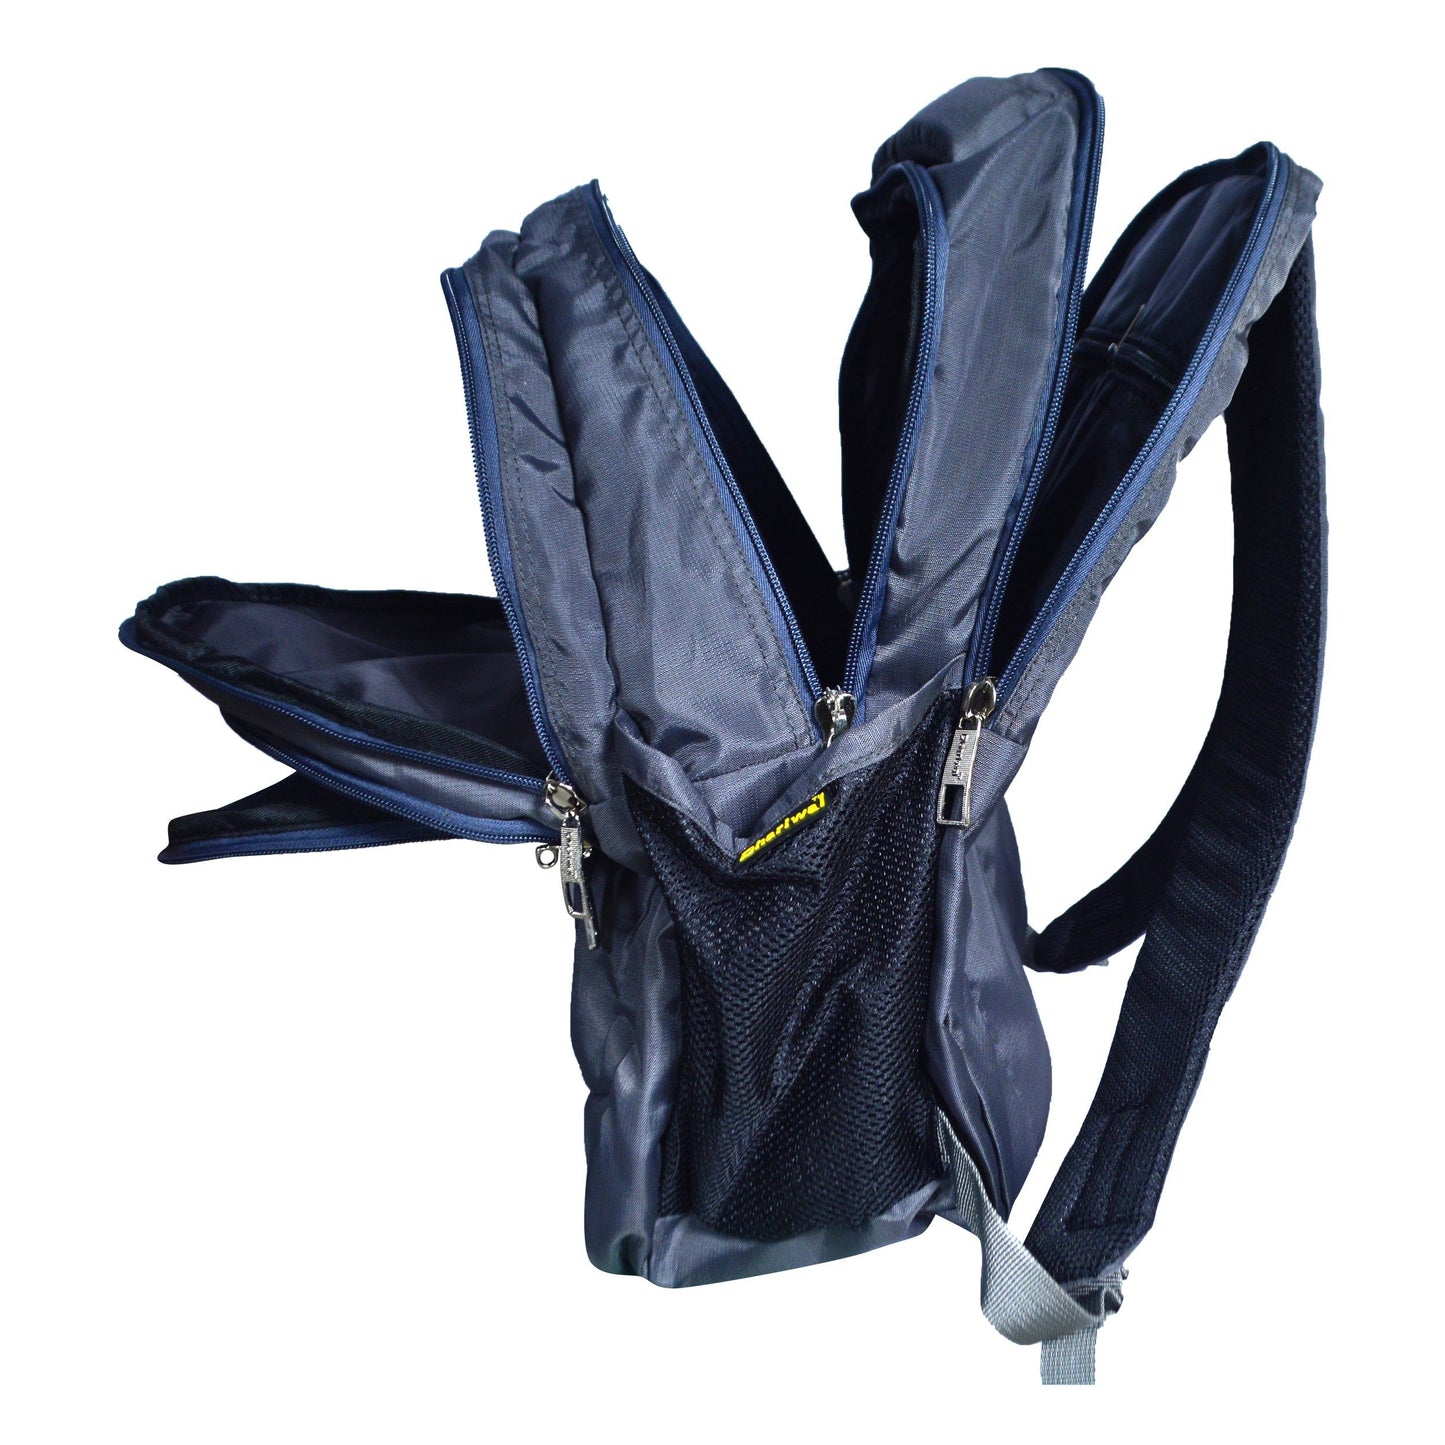 Dhariwal Triple Compartment Backpack with Rain Cover 39L BP-217 School Bags Mohanlal Jain (Dhariwal Bags) 